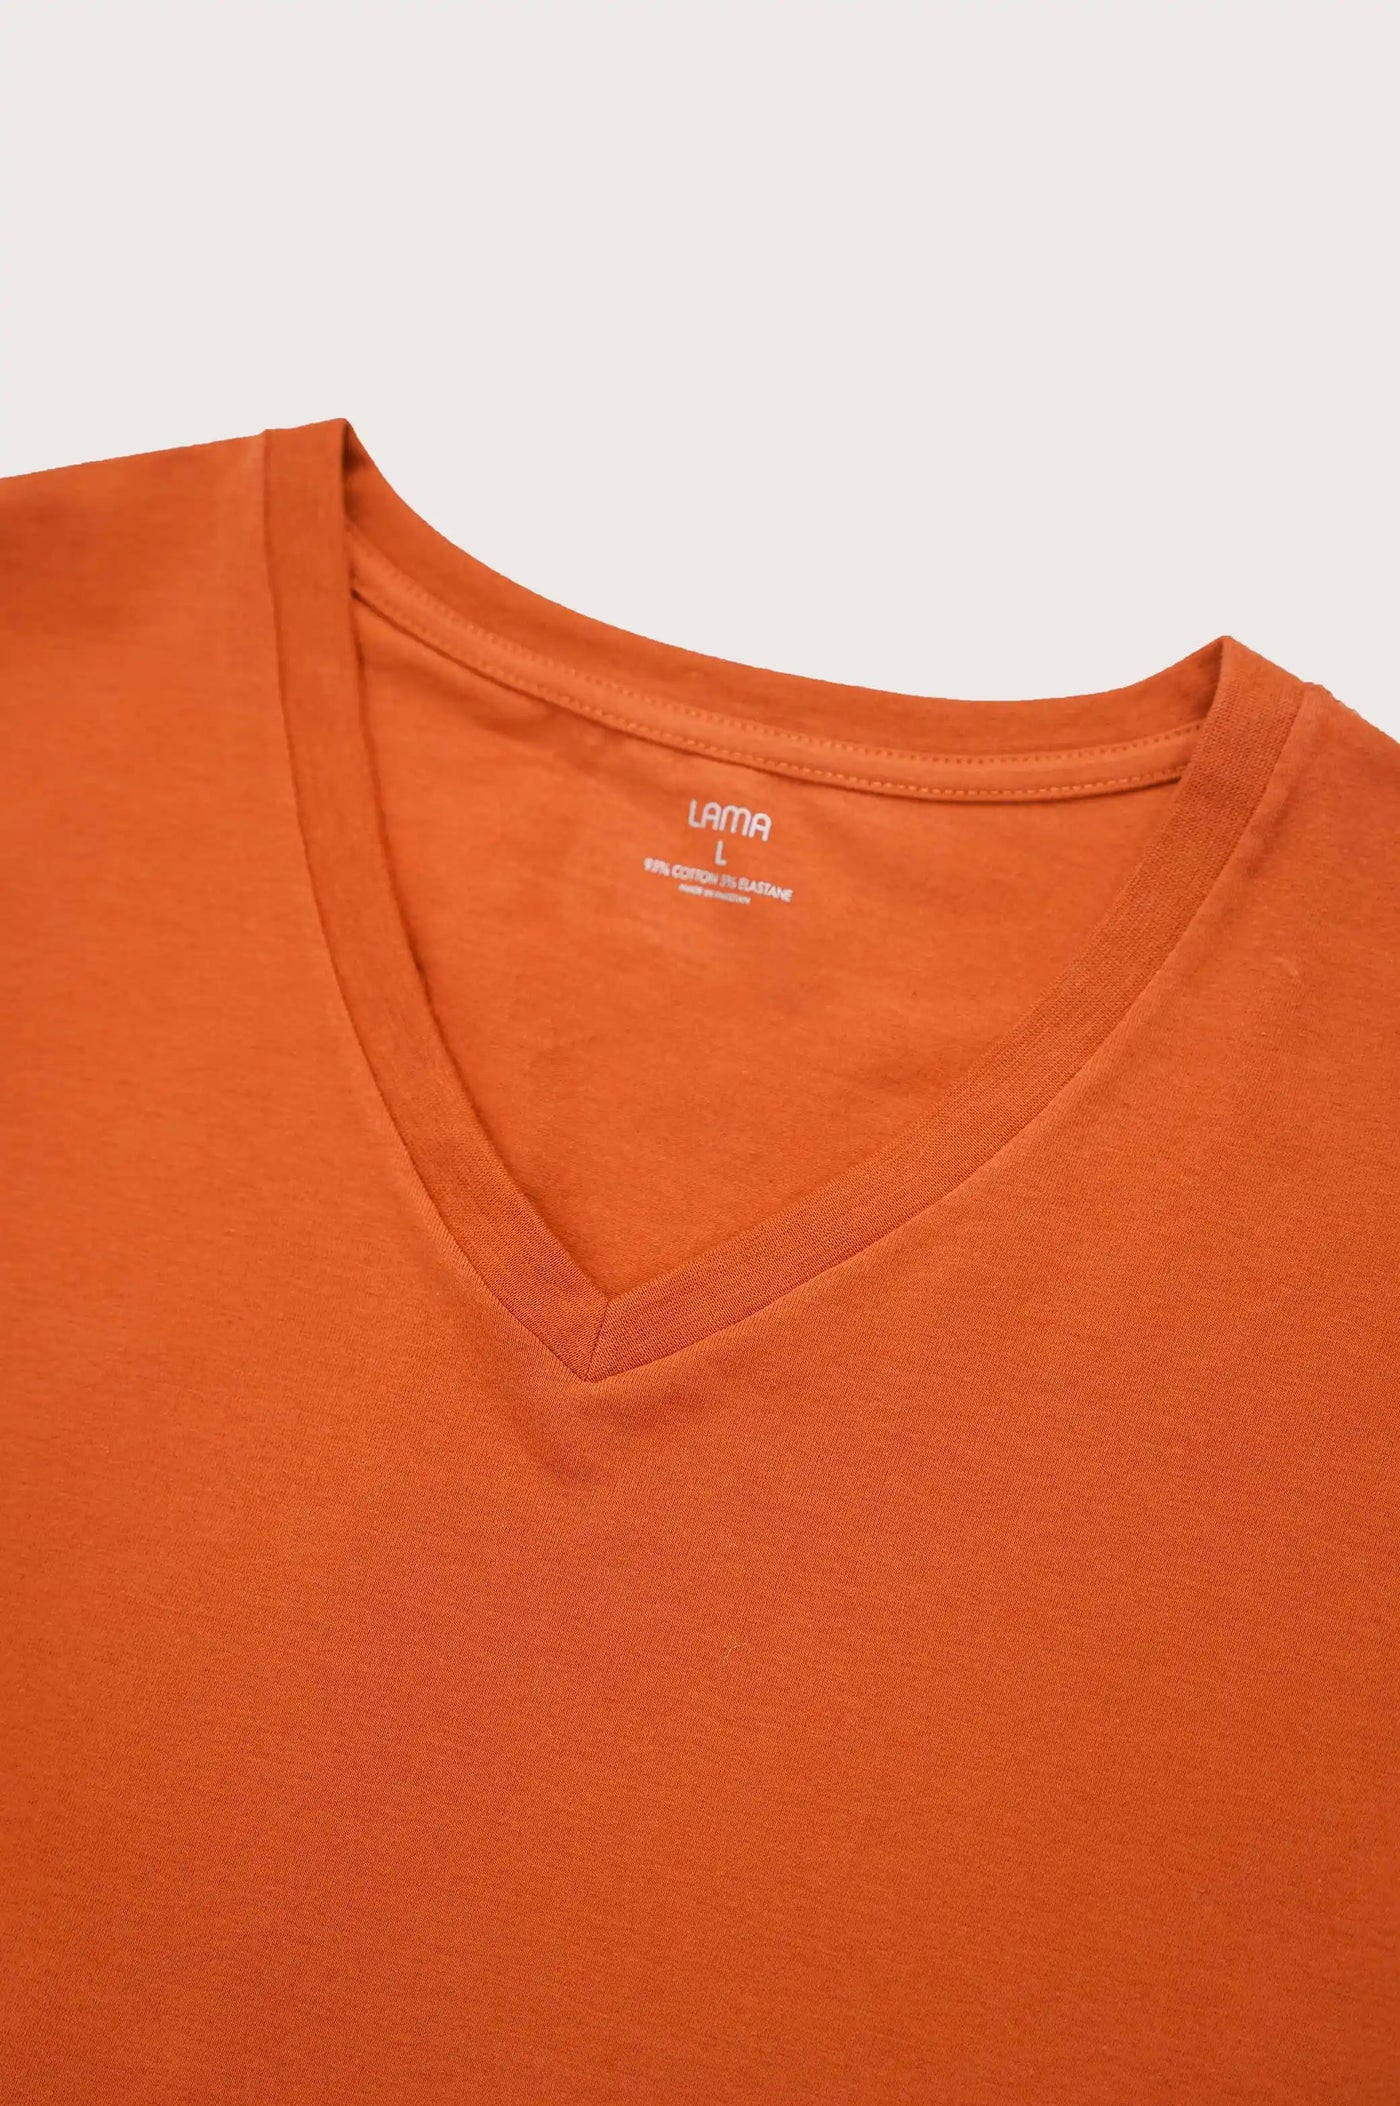 Rust V Neck T-Shirt